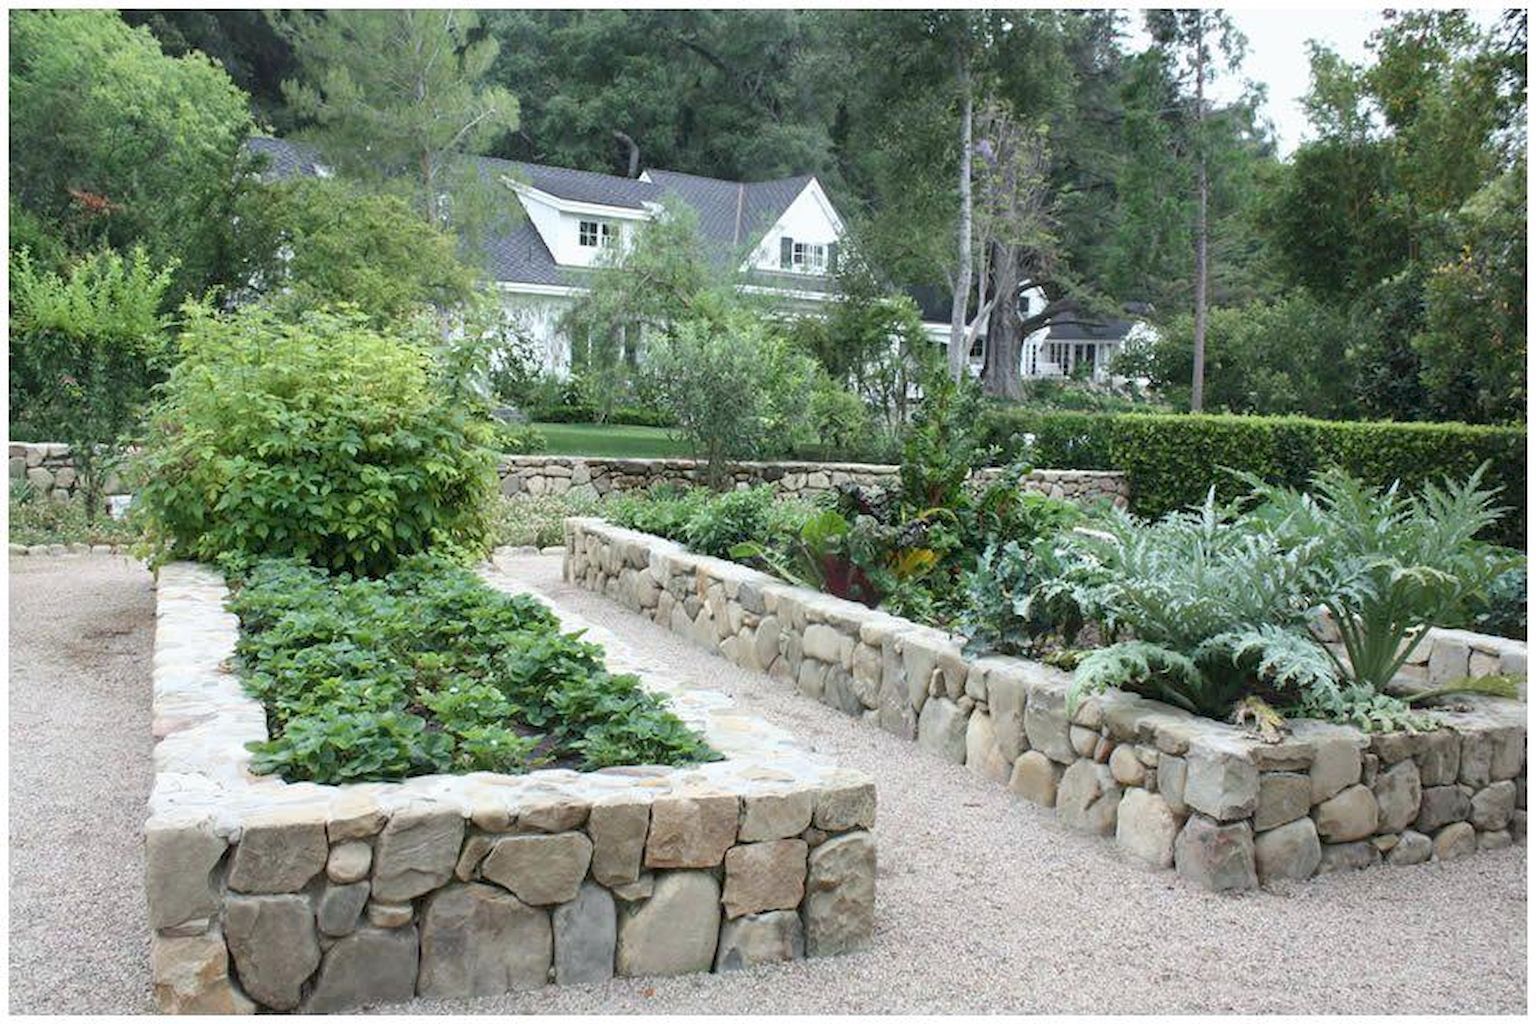 45 Easy DIY Raised Garden Bed Design Front and Backyard Landscaping Ideas - Insidexterior -   14 garden design Stones planters ideas